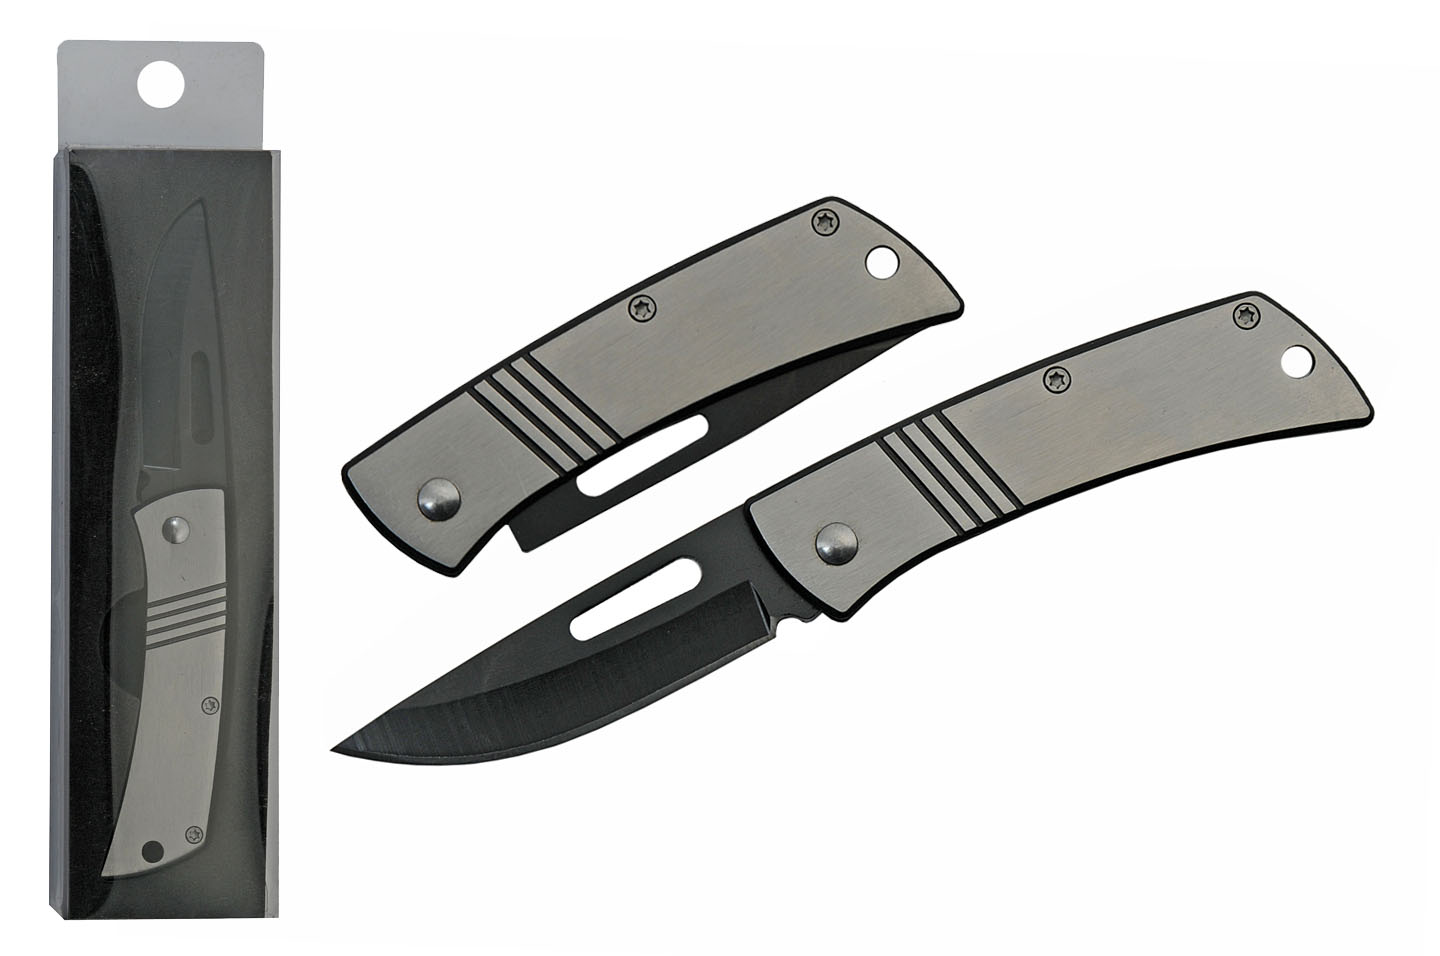 Folding Knife 2.5in. Black Blade Silver Stainless Steel Handle Slim Mini EDC